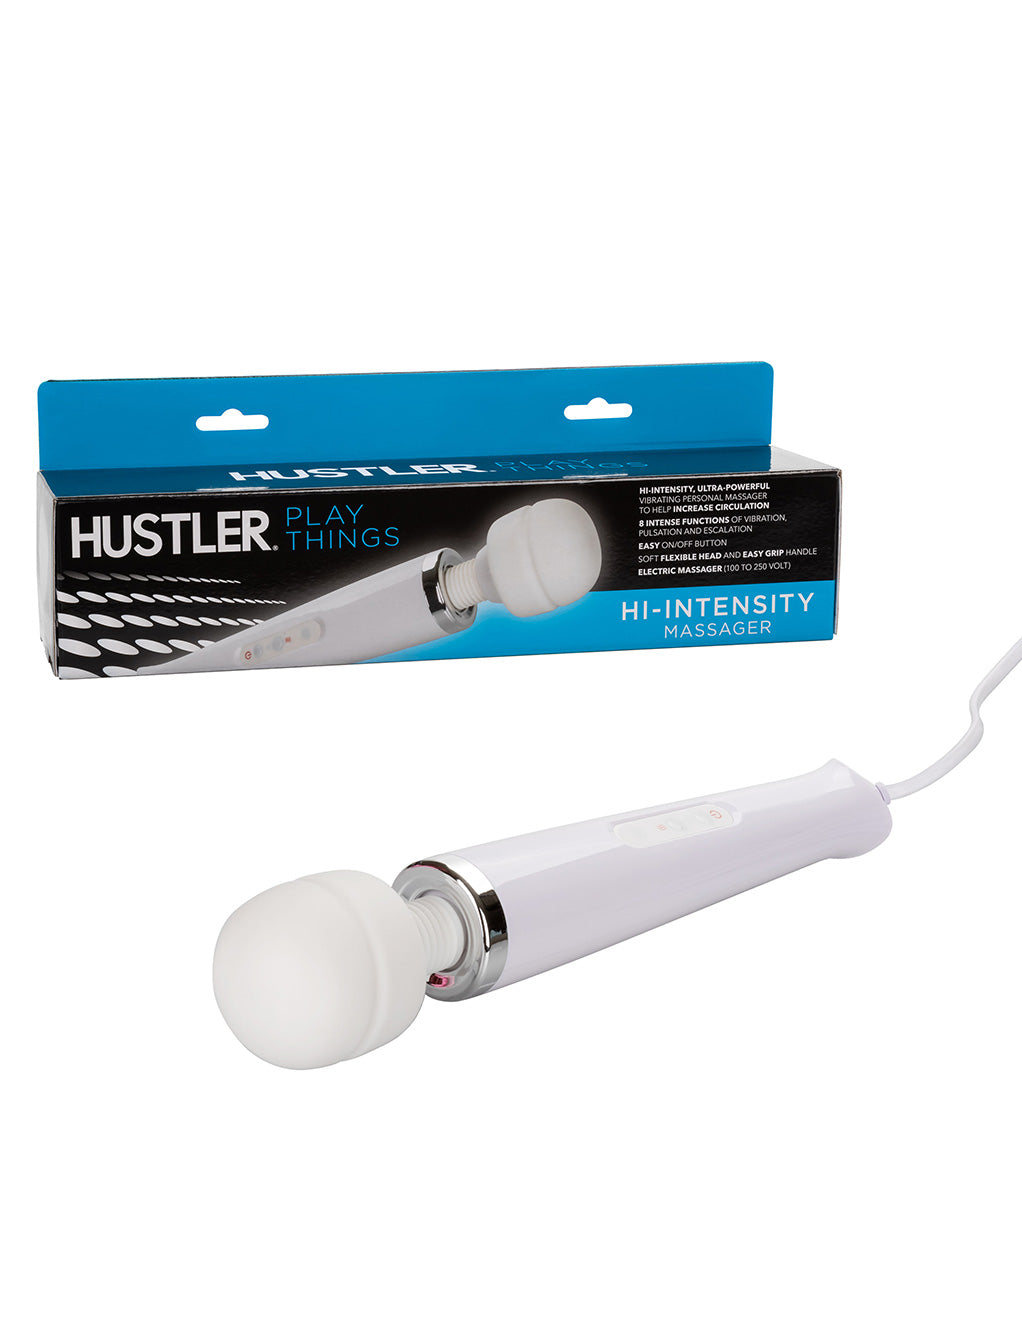 Hustler® Playthings Hi-Intensity Massager- With box